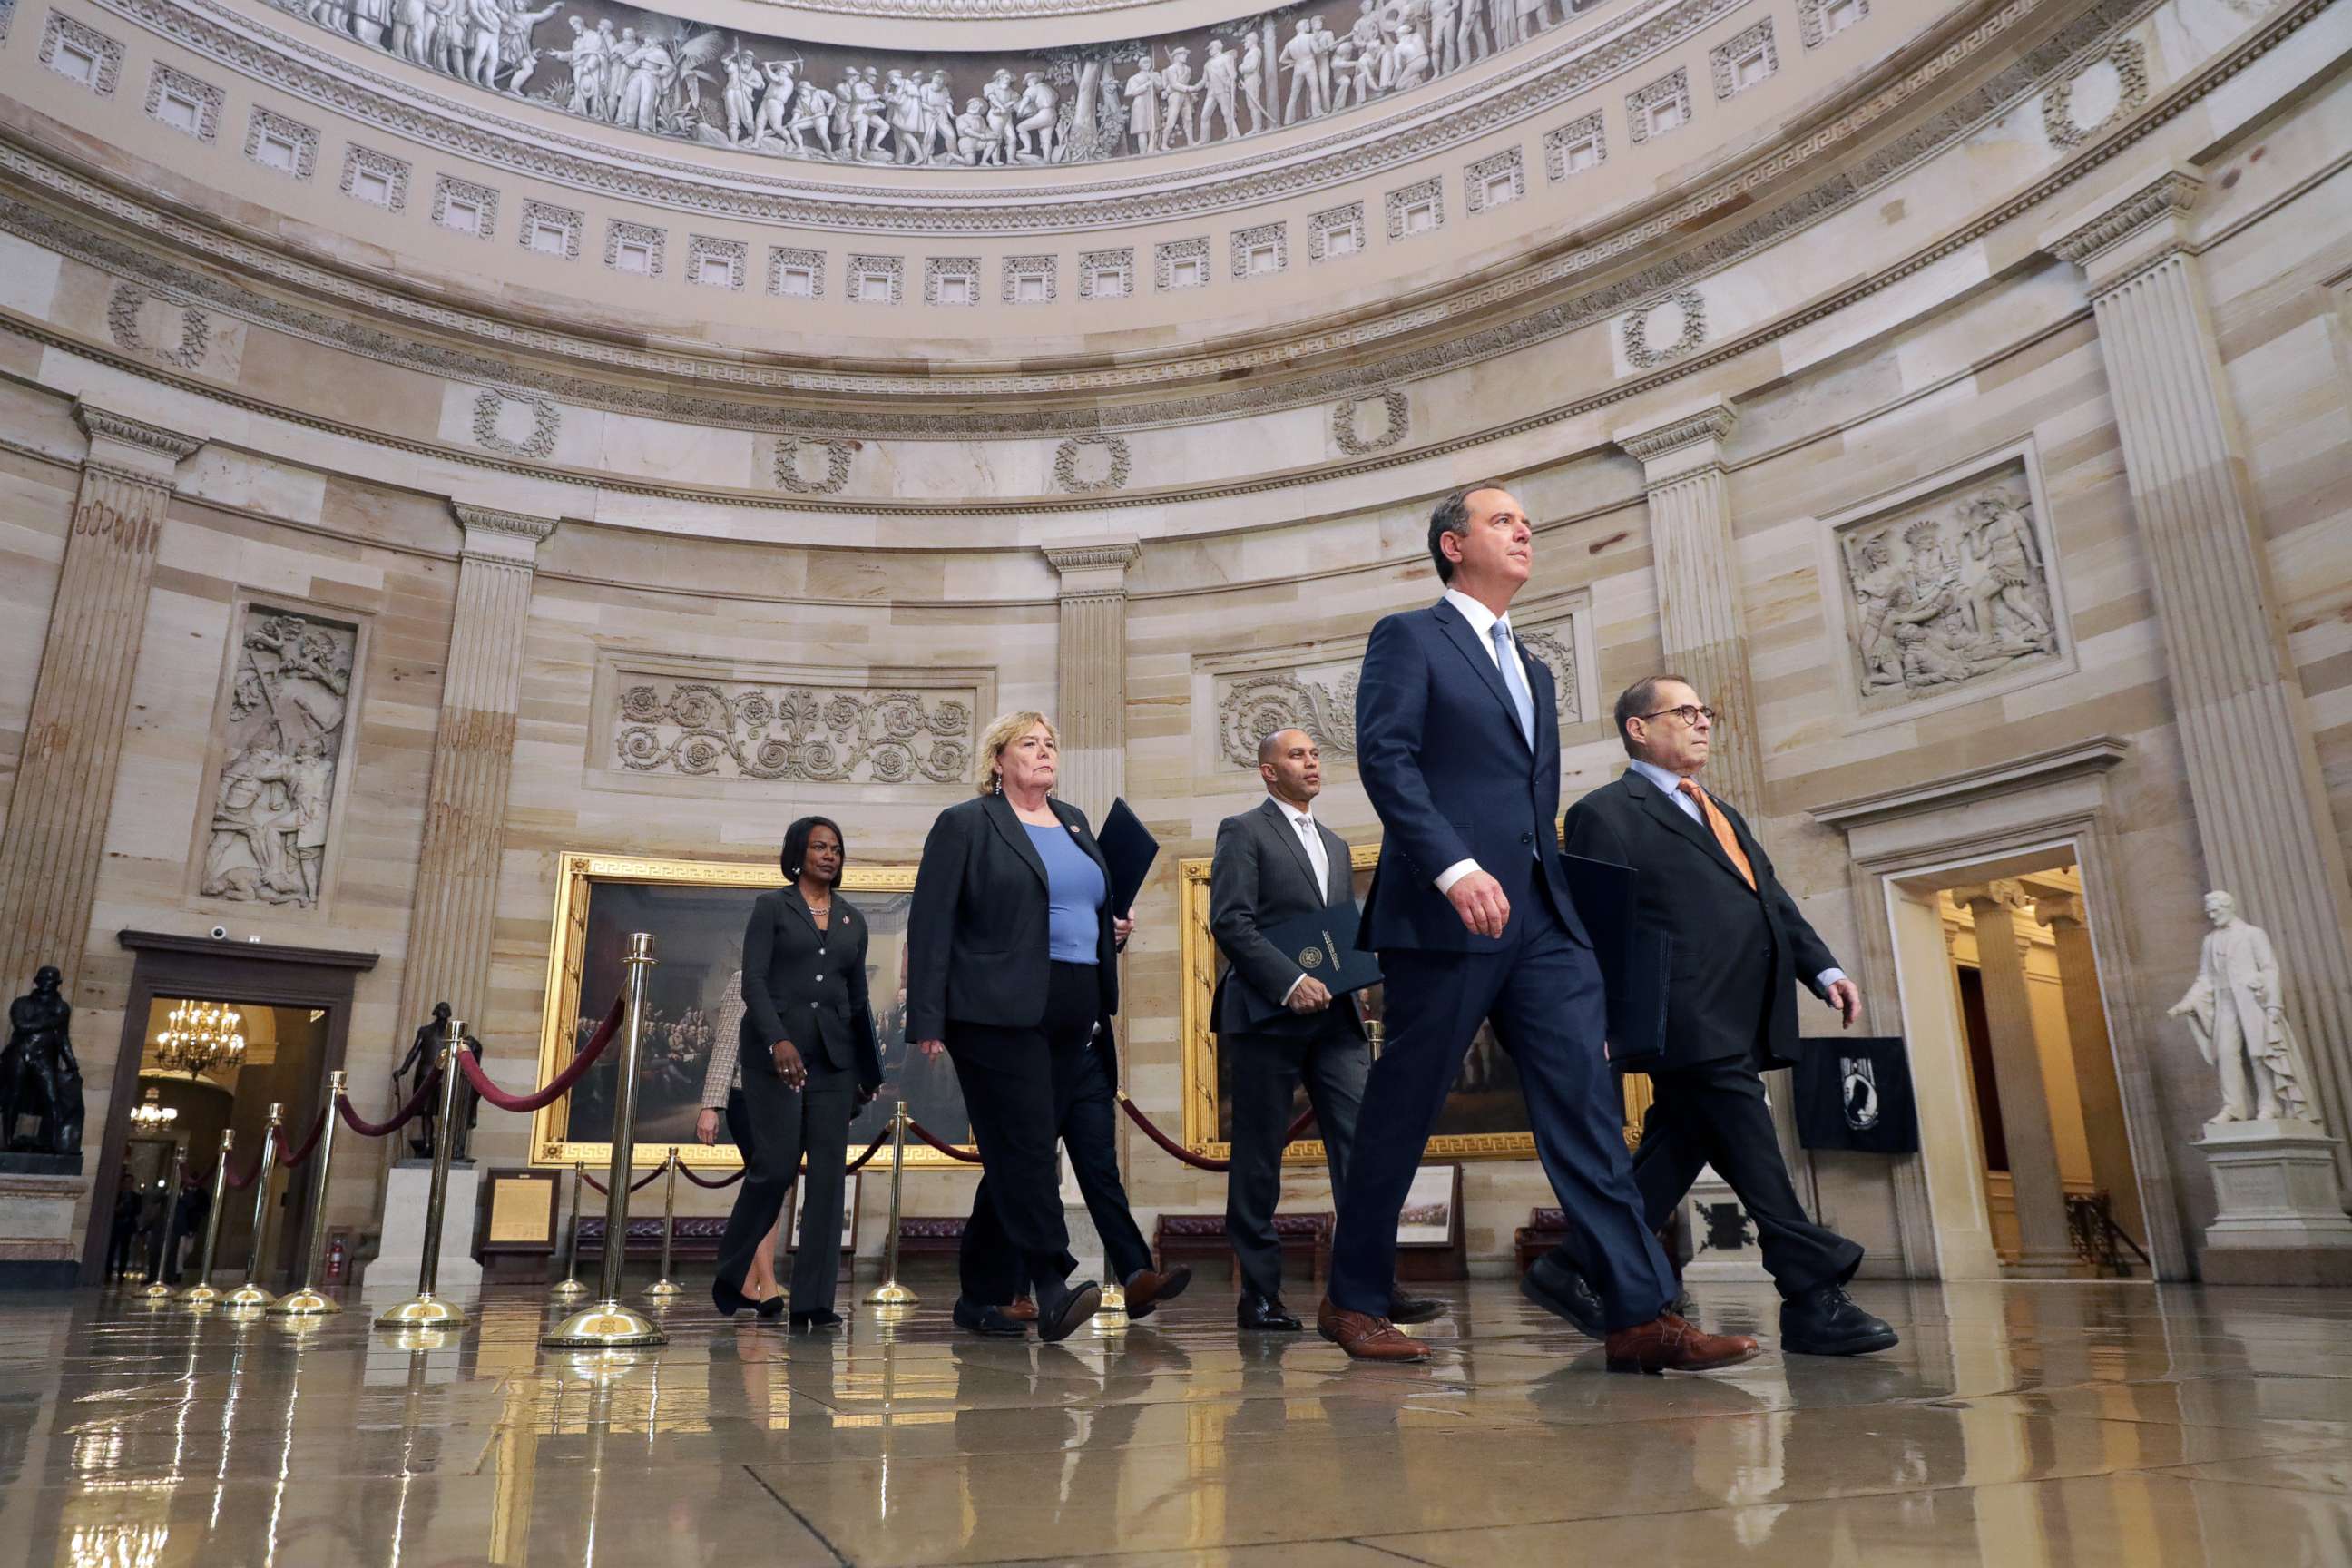 PHOTO: Representatives walk through the Rotunda of the Capitol on their way to the Senate, Jan. 16, 2020.